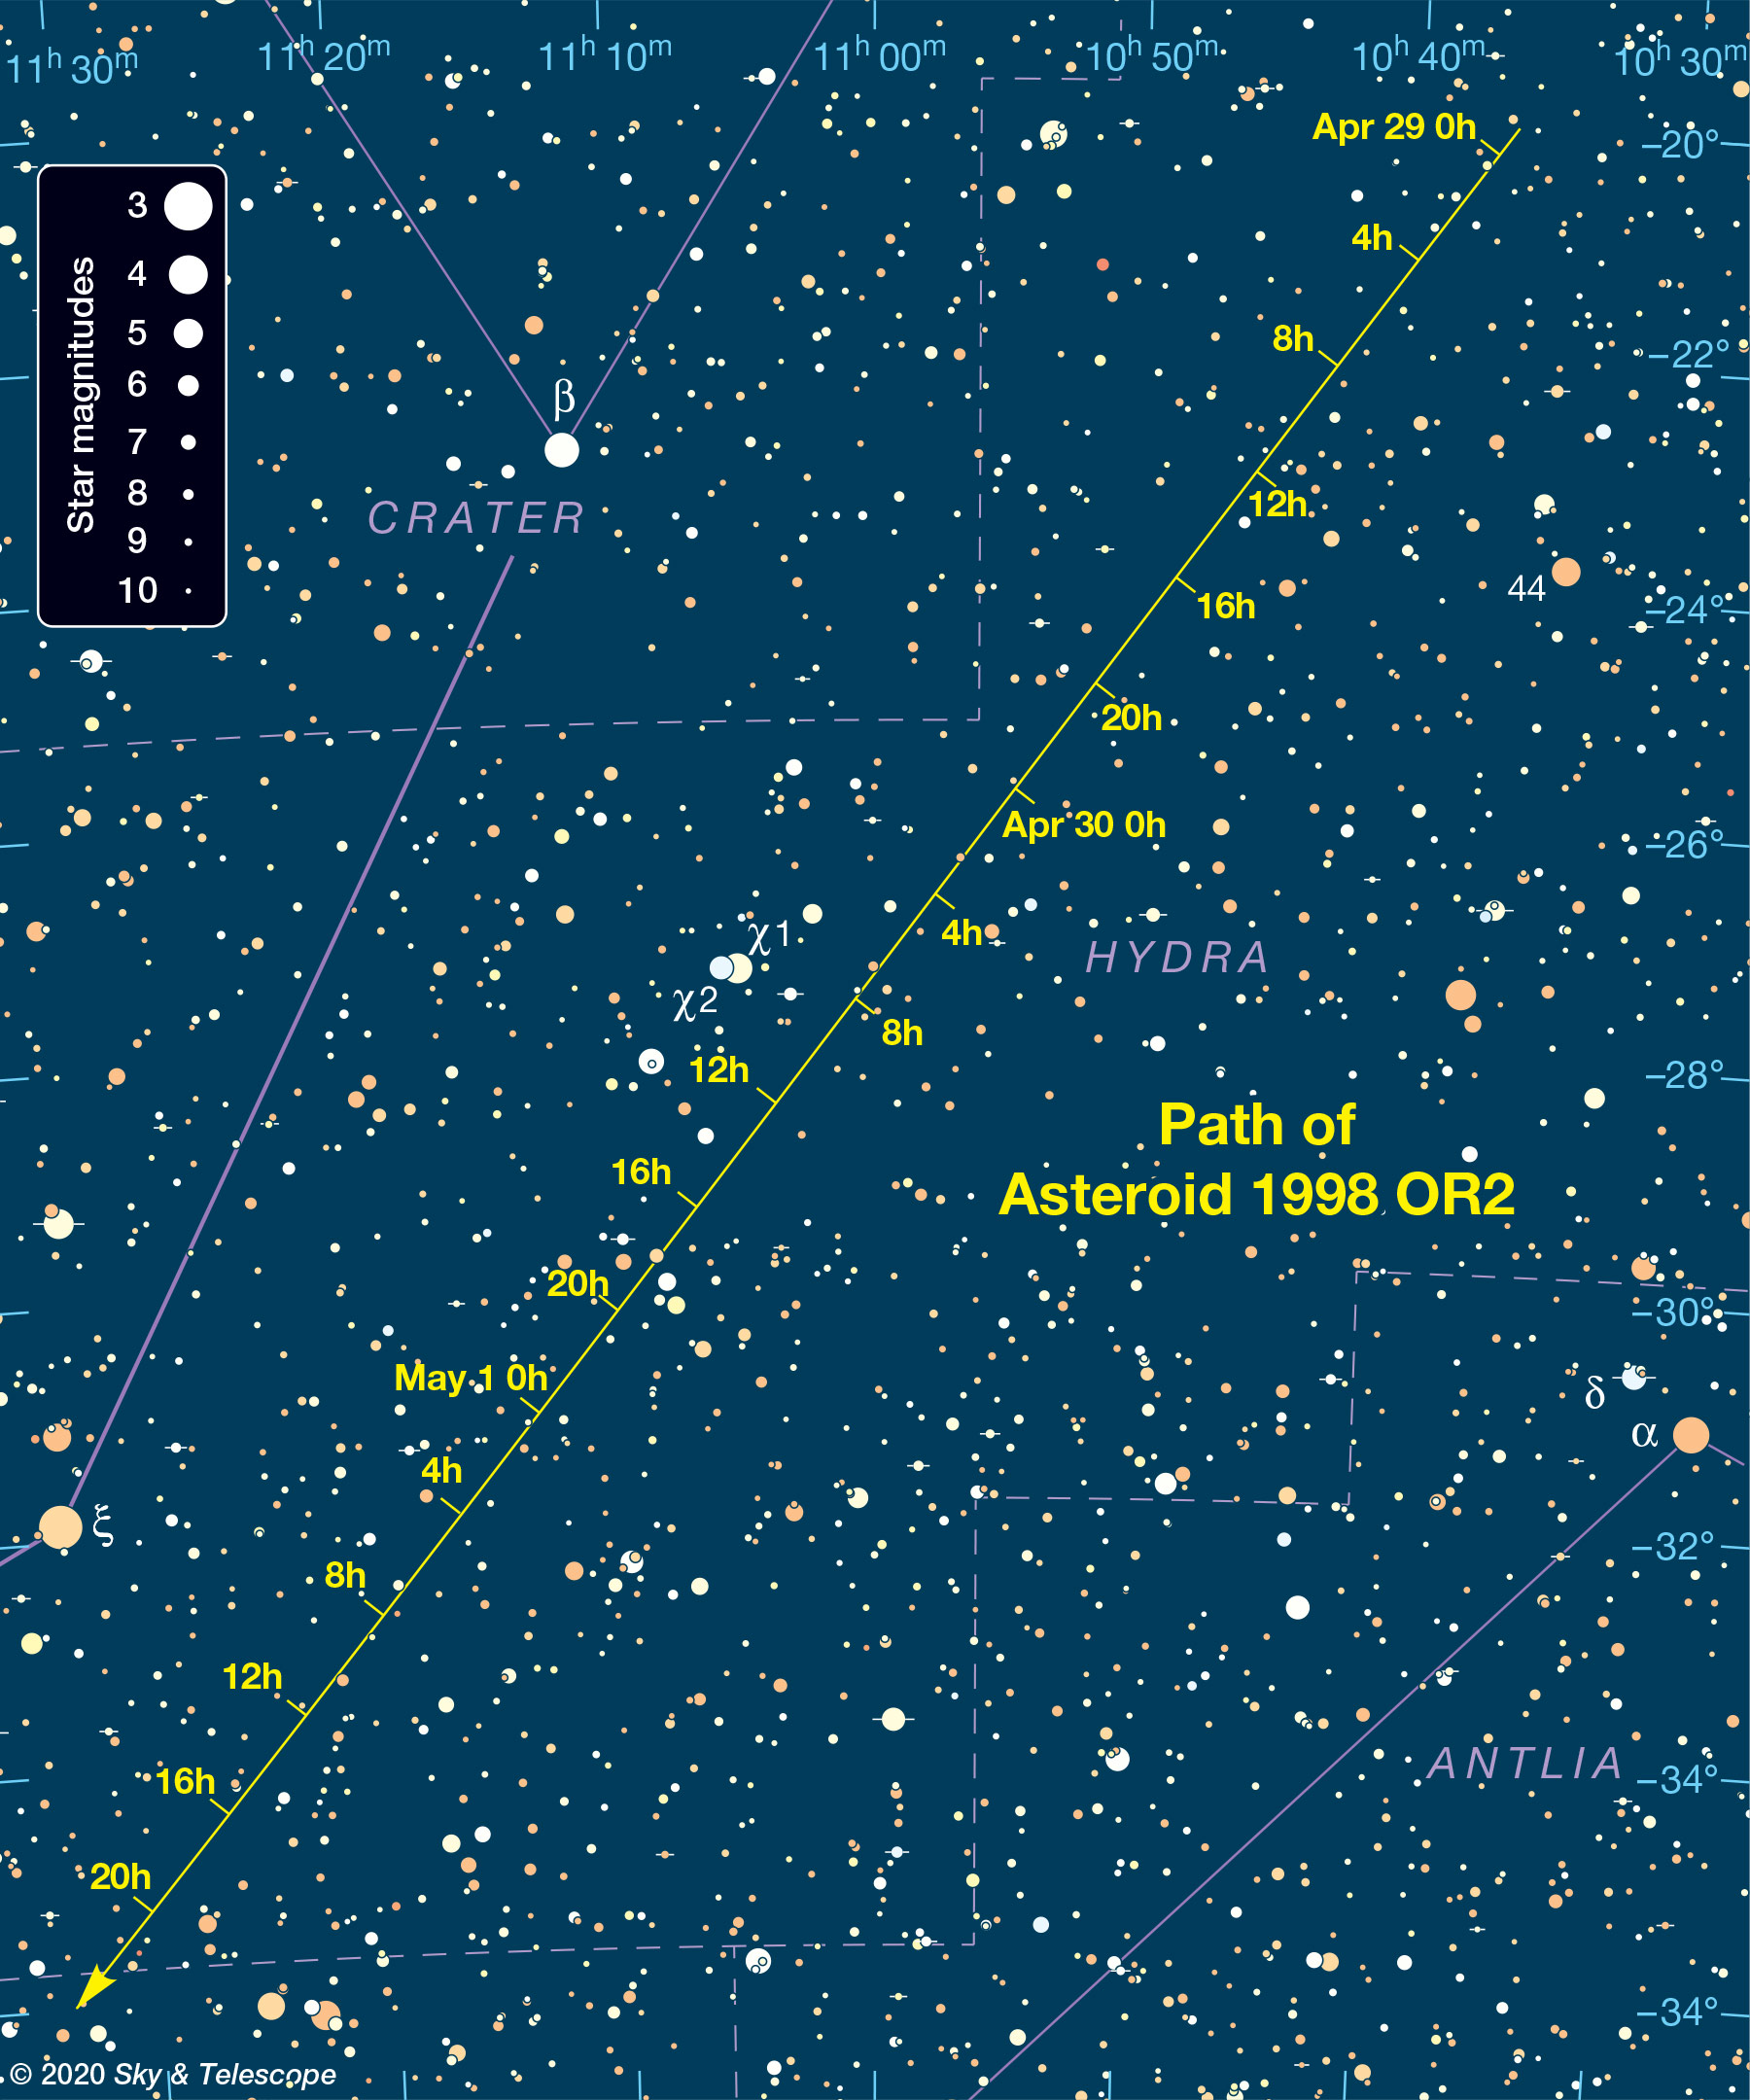 mapka dráhy asteroidu_1998-OR2 pro 29.4. _1.5.2020.jpg